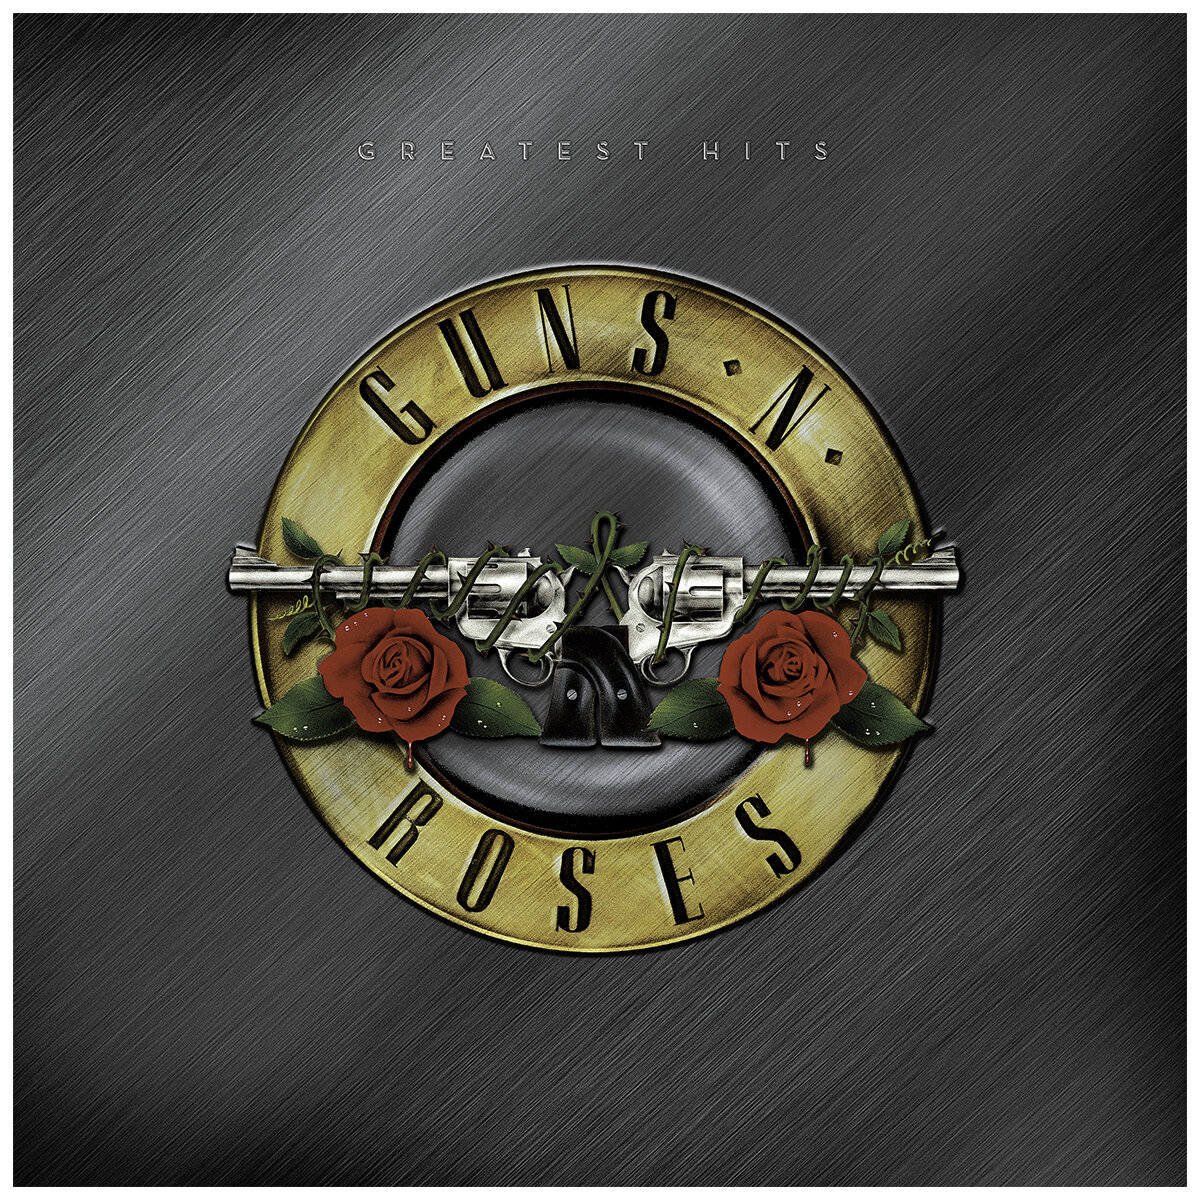 Gunsn Roses Amazon Greatest Hits - Guns N Roses Amazon Beste Hits Wallpaper